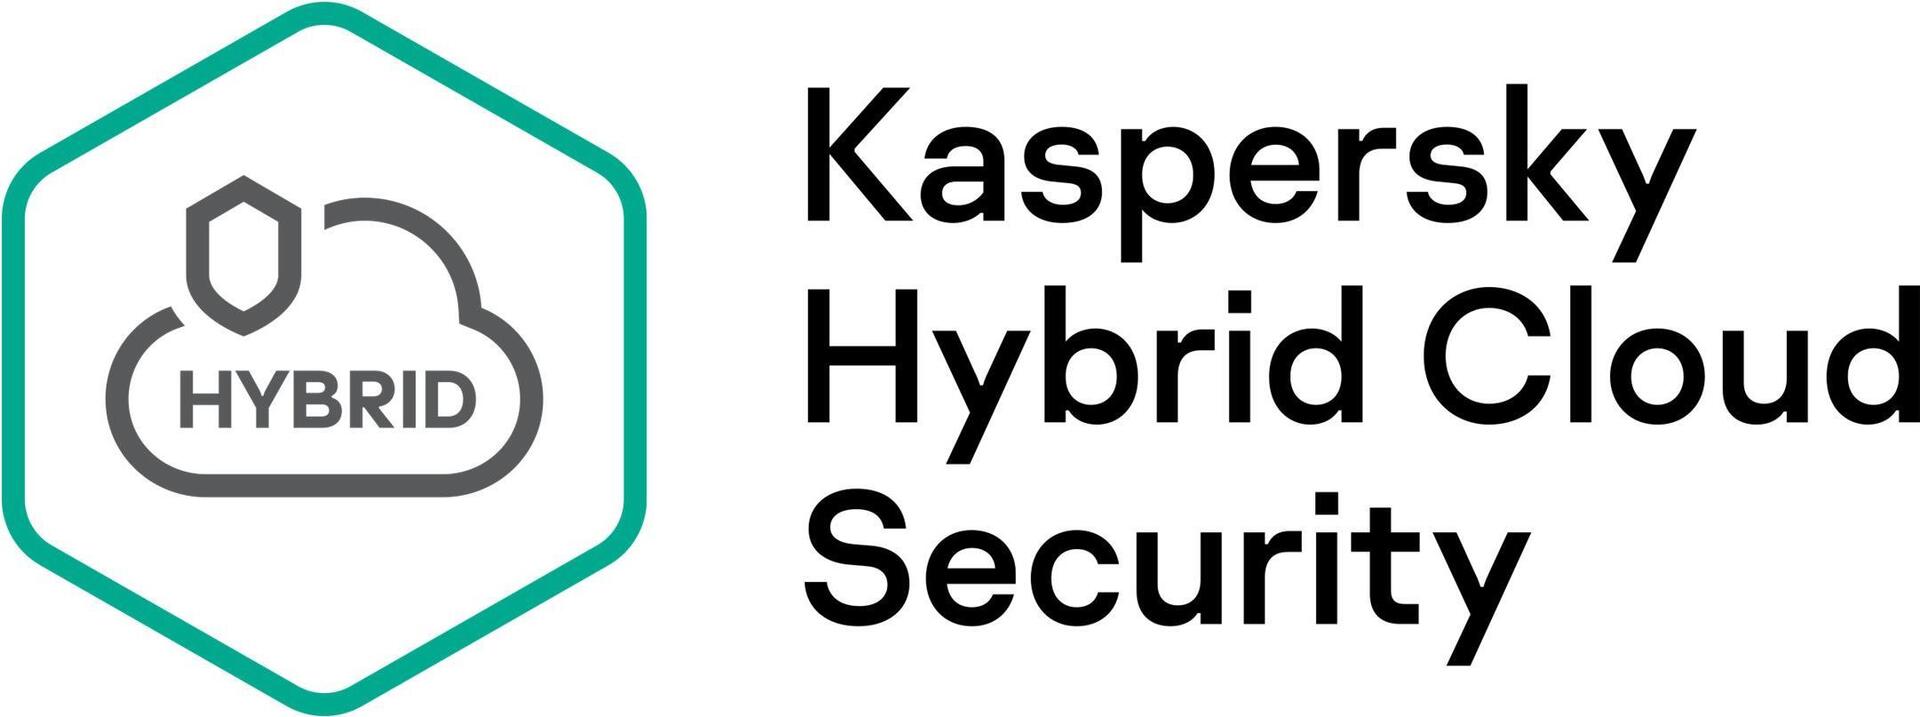 Kaspersky Hybrid Cloud Security Enterprise CPU European Edi. 150-249 CPU 3-Year Renewal License (KL4553XASTR)